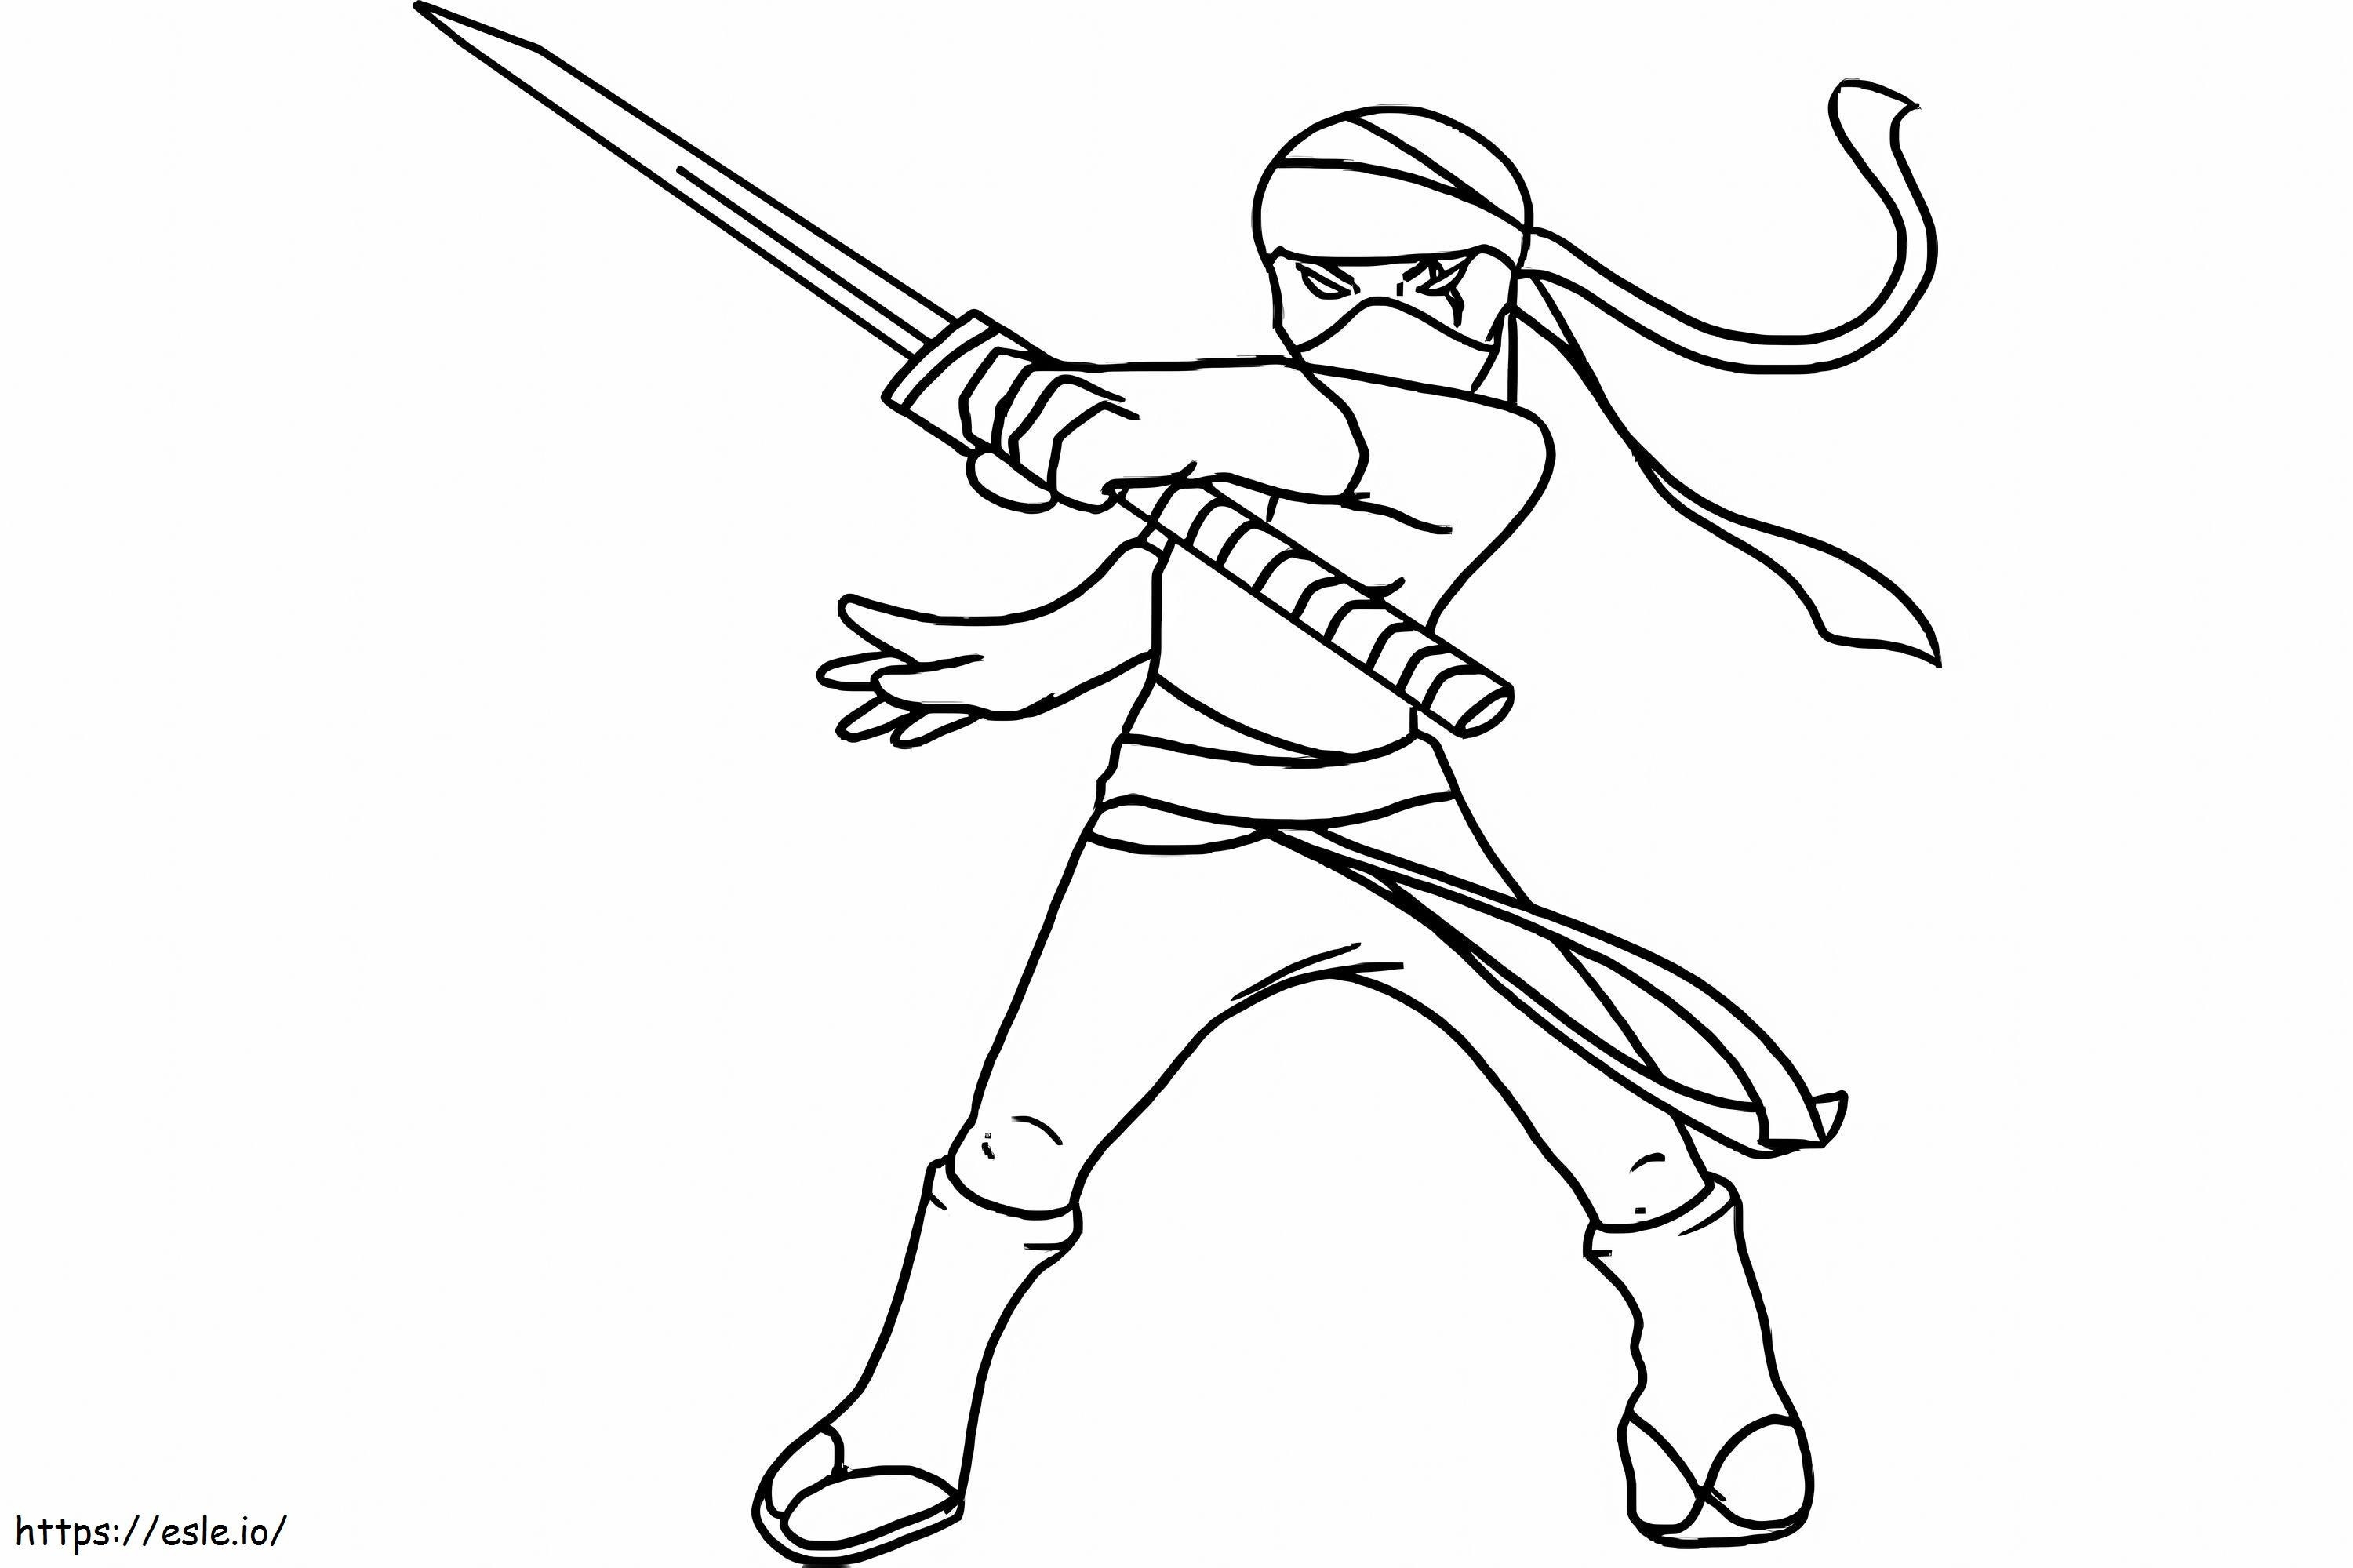 Ninja 5 coloring page